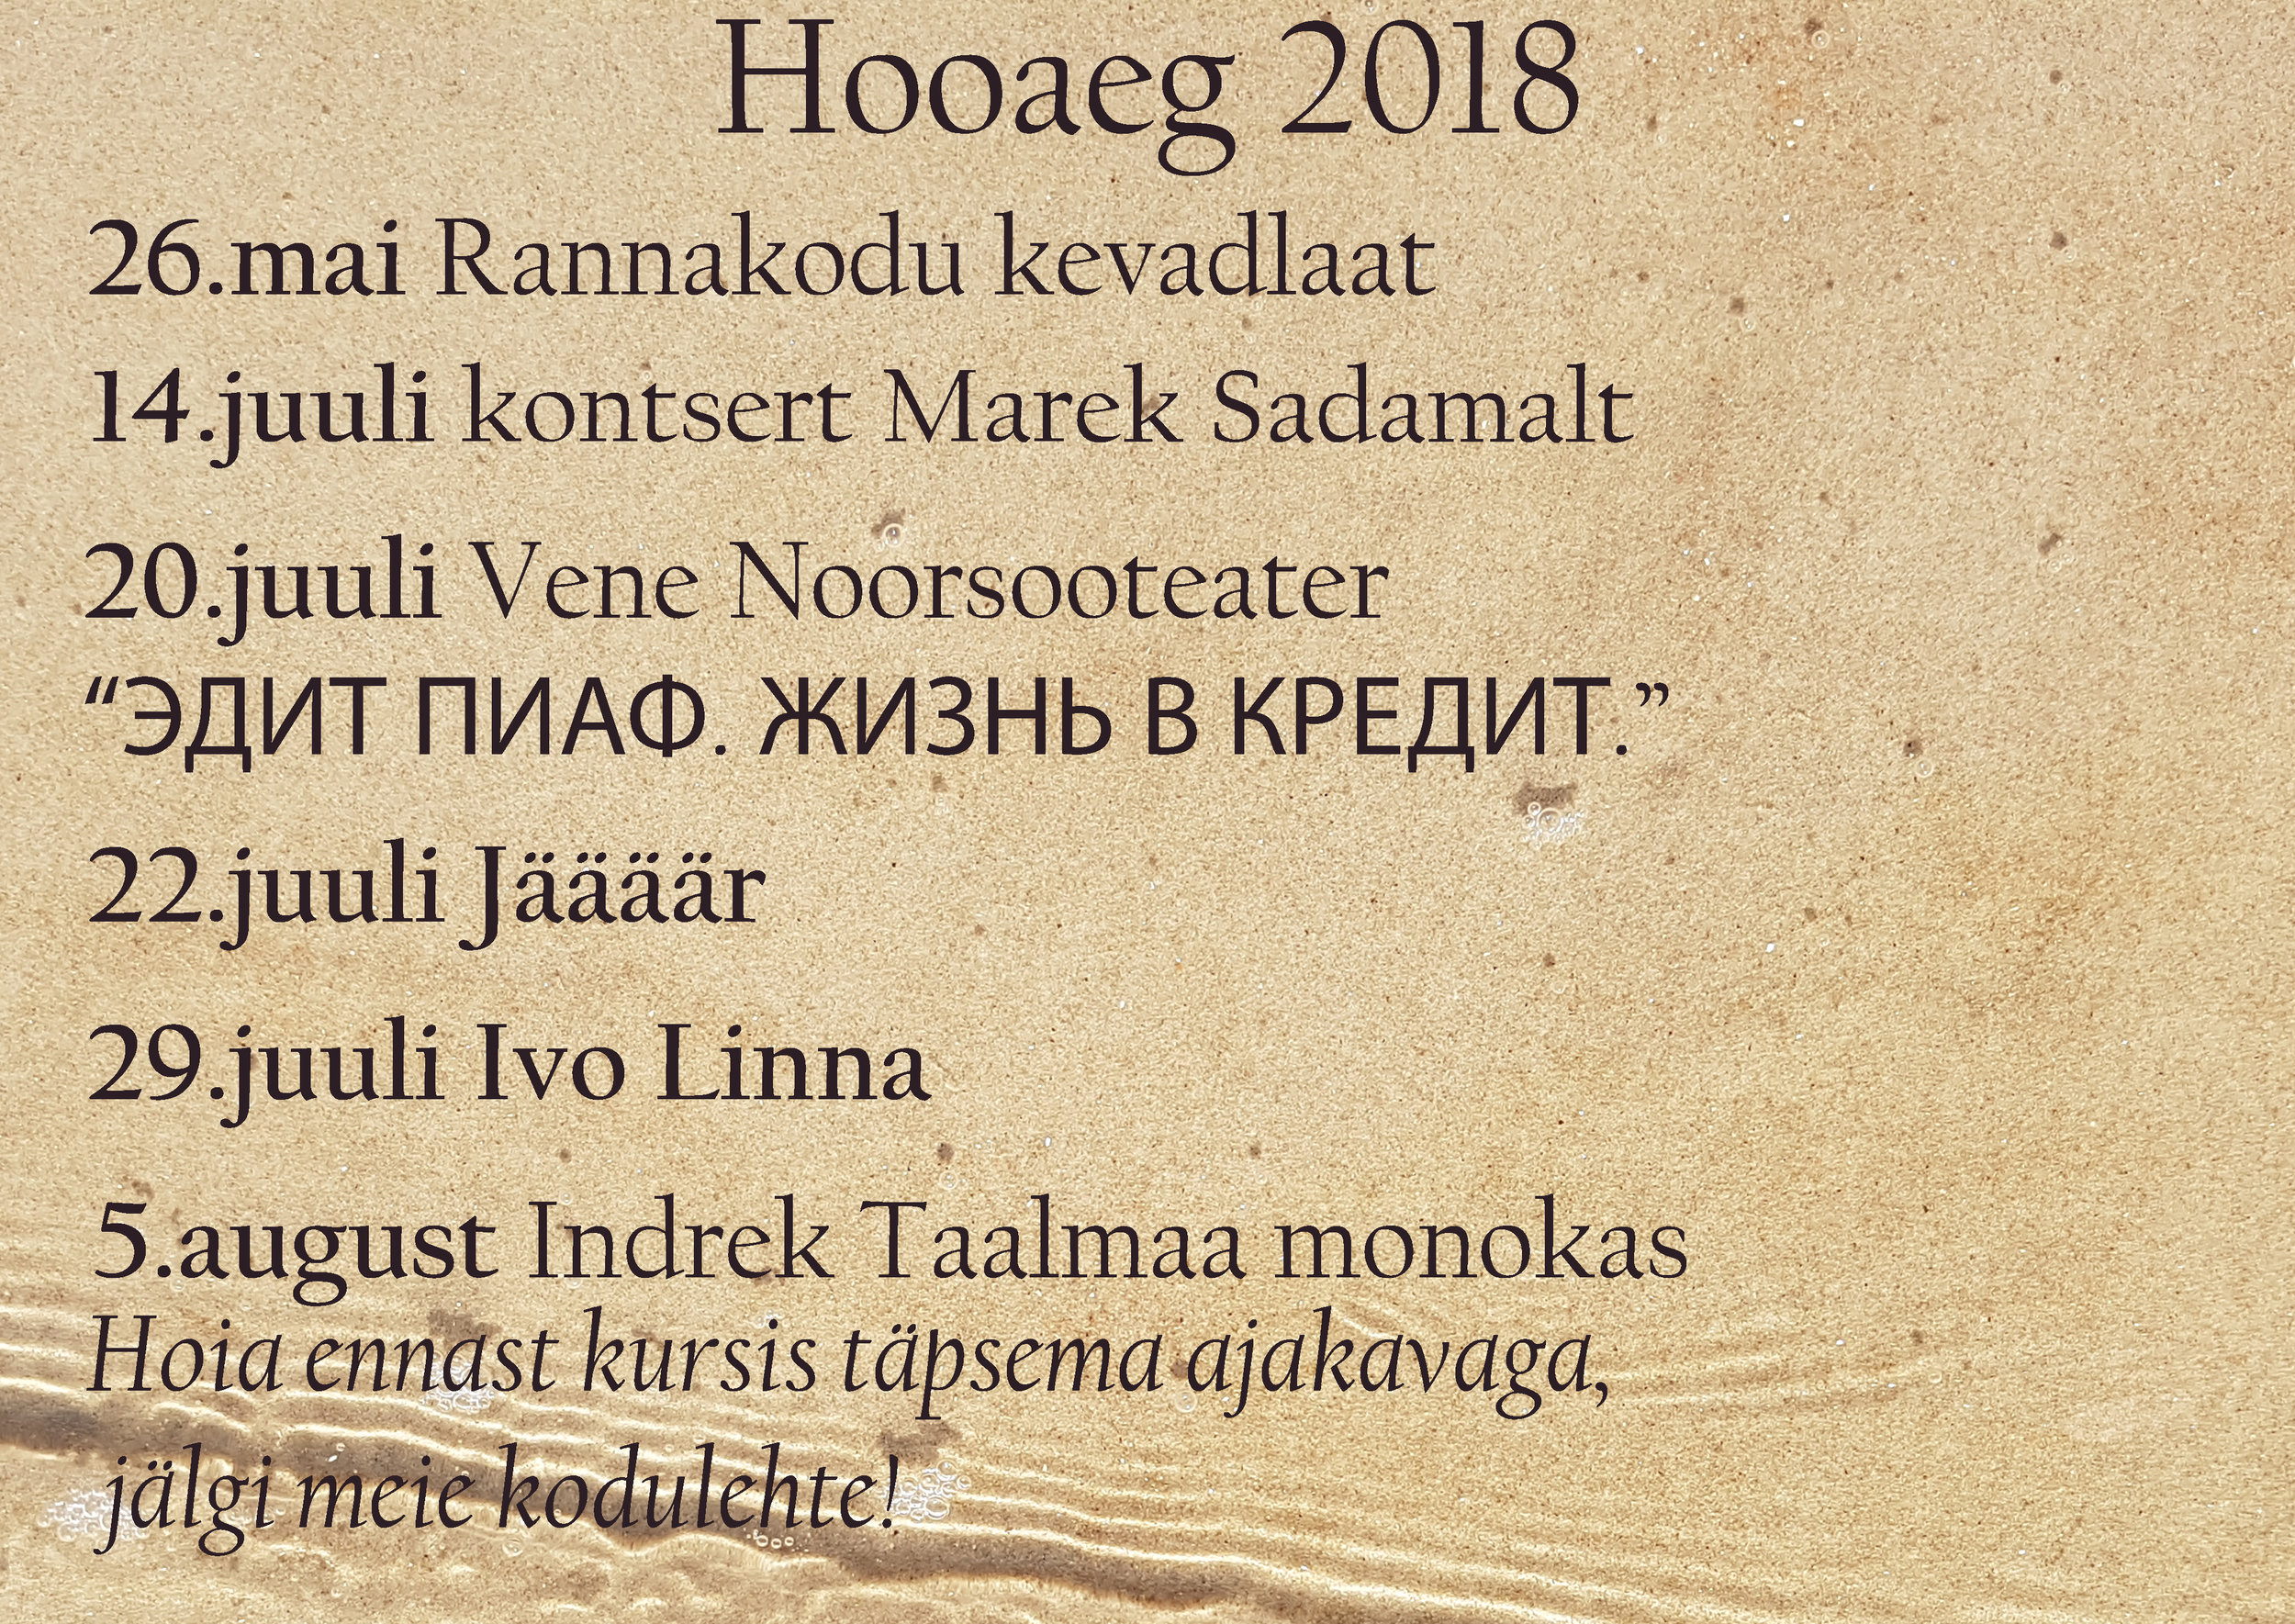 Hooaeg 2018